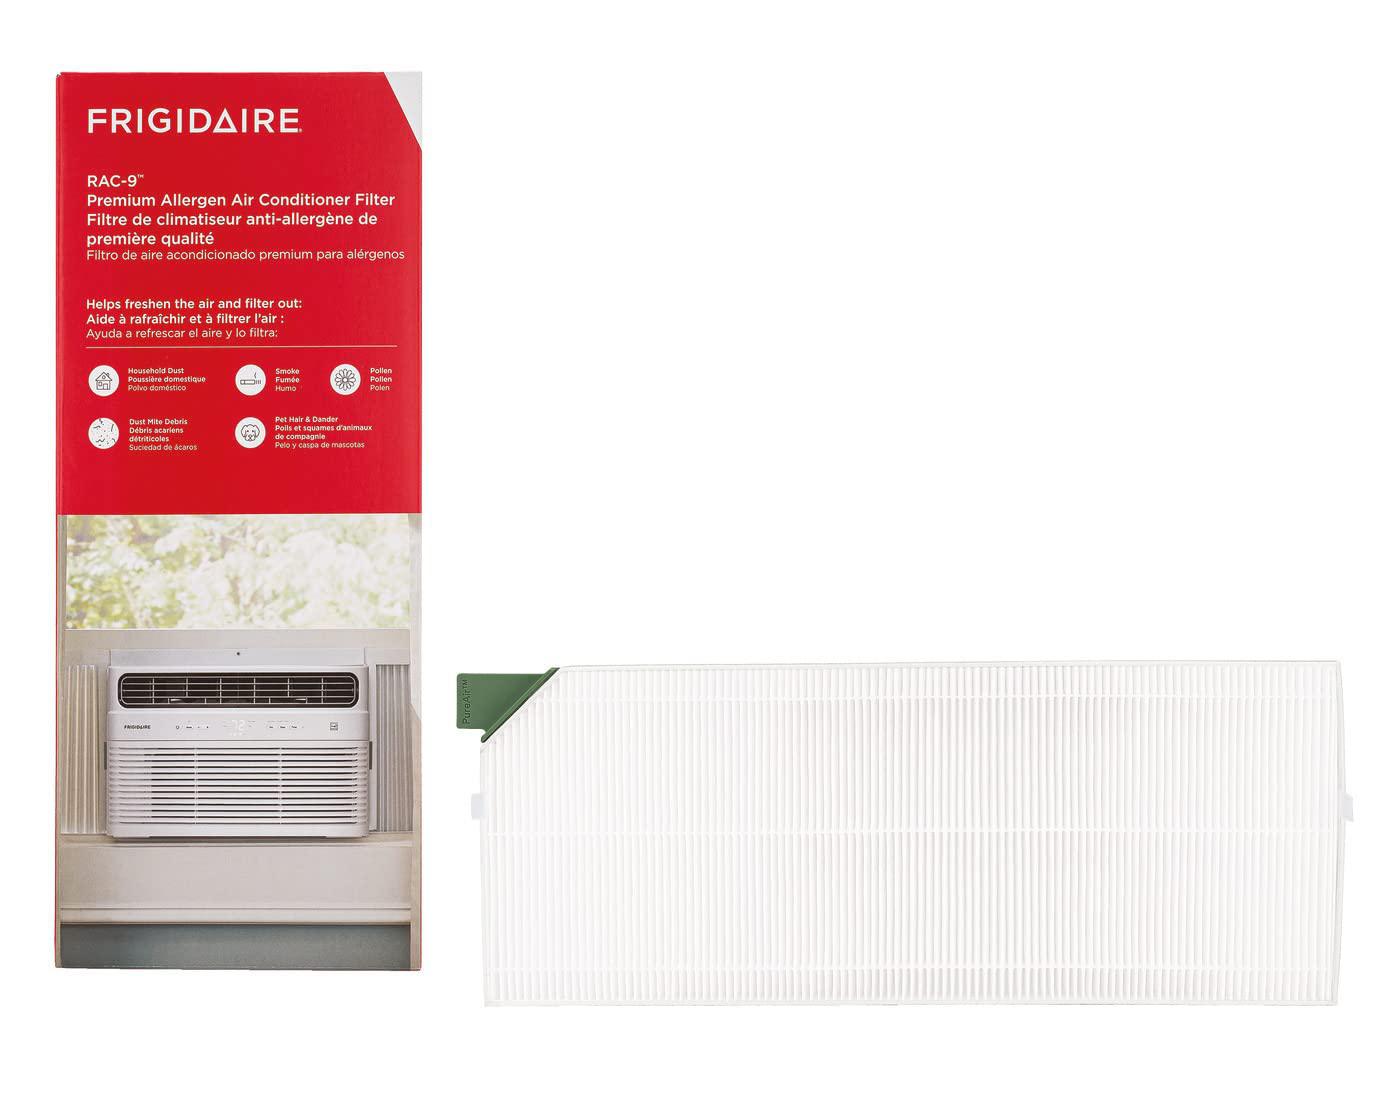 frigidaire frparac9 pureair rac-9 premium allergen air filter replacement for window acs - effective for dust, pollen, and pe